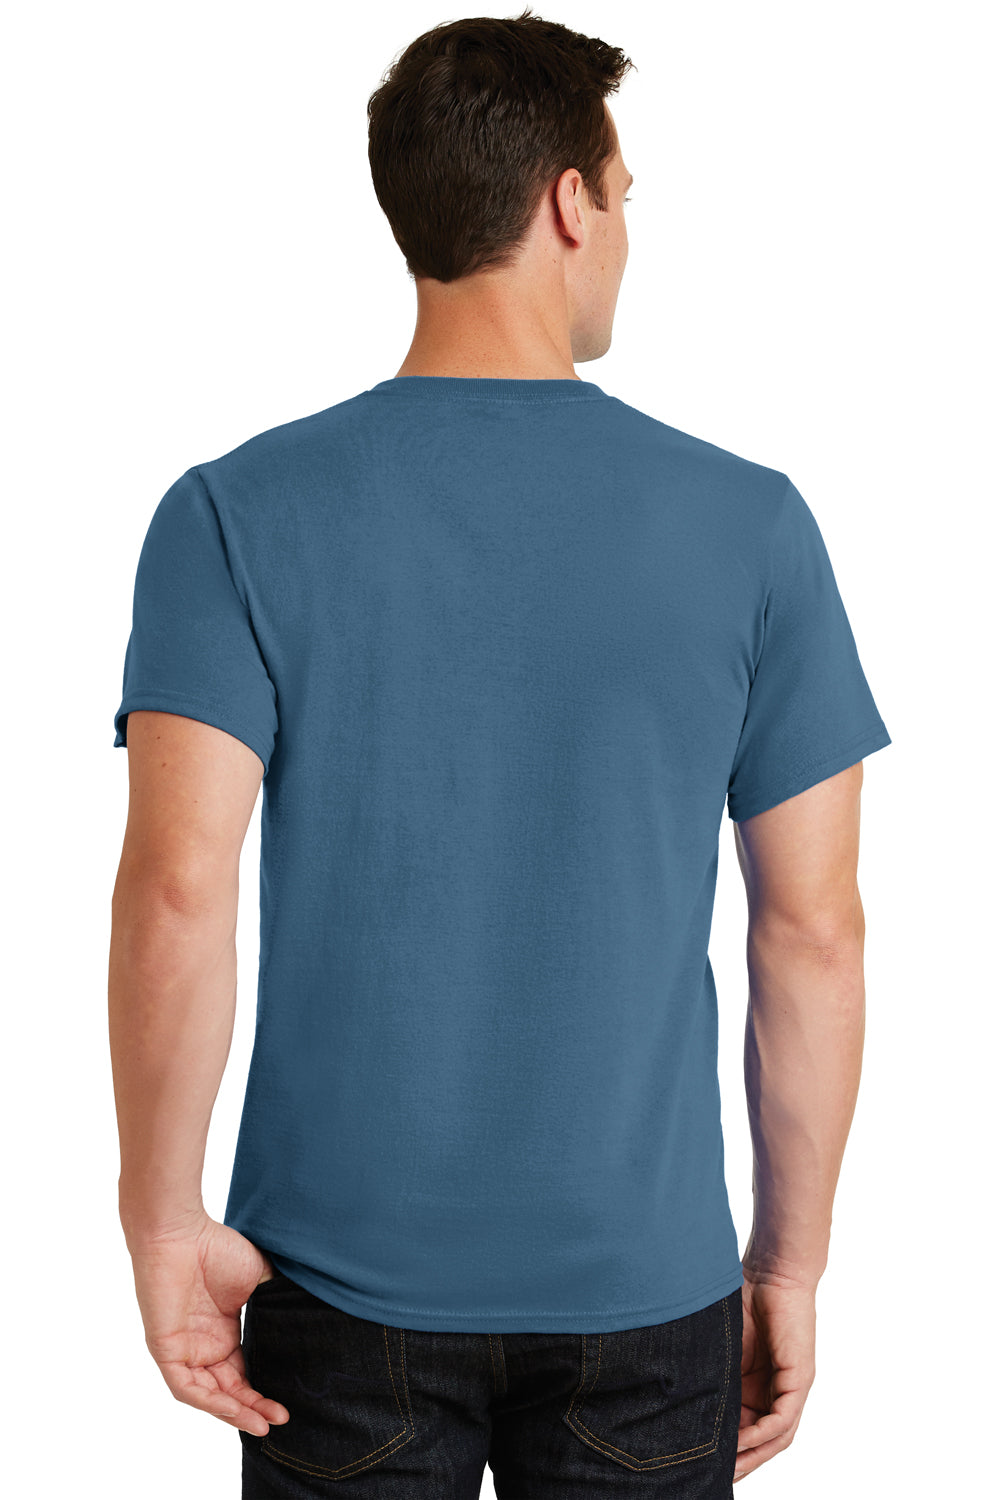 Port & Company PC61 Mens Essential Short Sleeve Crewneck T-Shirt Colonial Blue Back